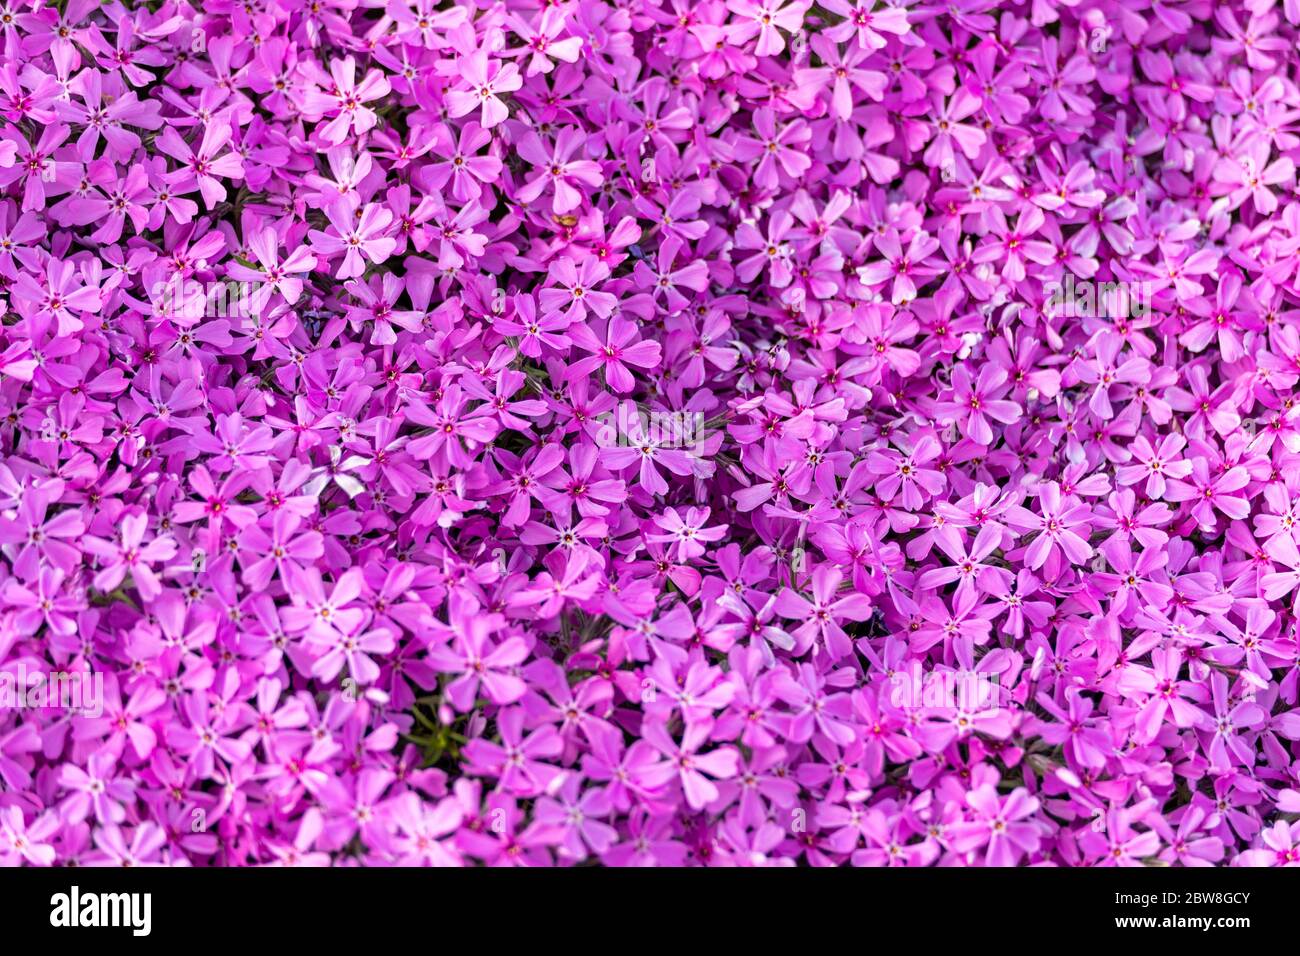 Pink five-petaled flowers of Atropurpurea creeping phlox or moss phlox or moss pink or mountain phlox (Phlox subulata) Stock Photo